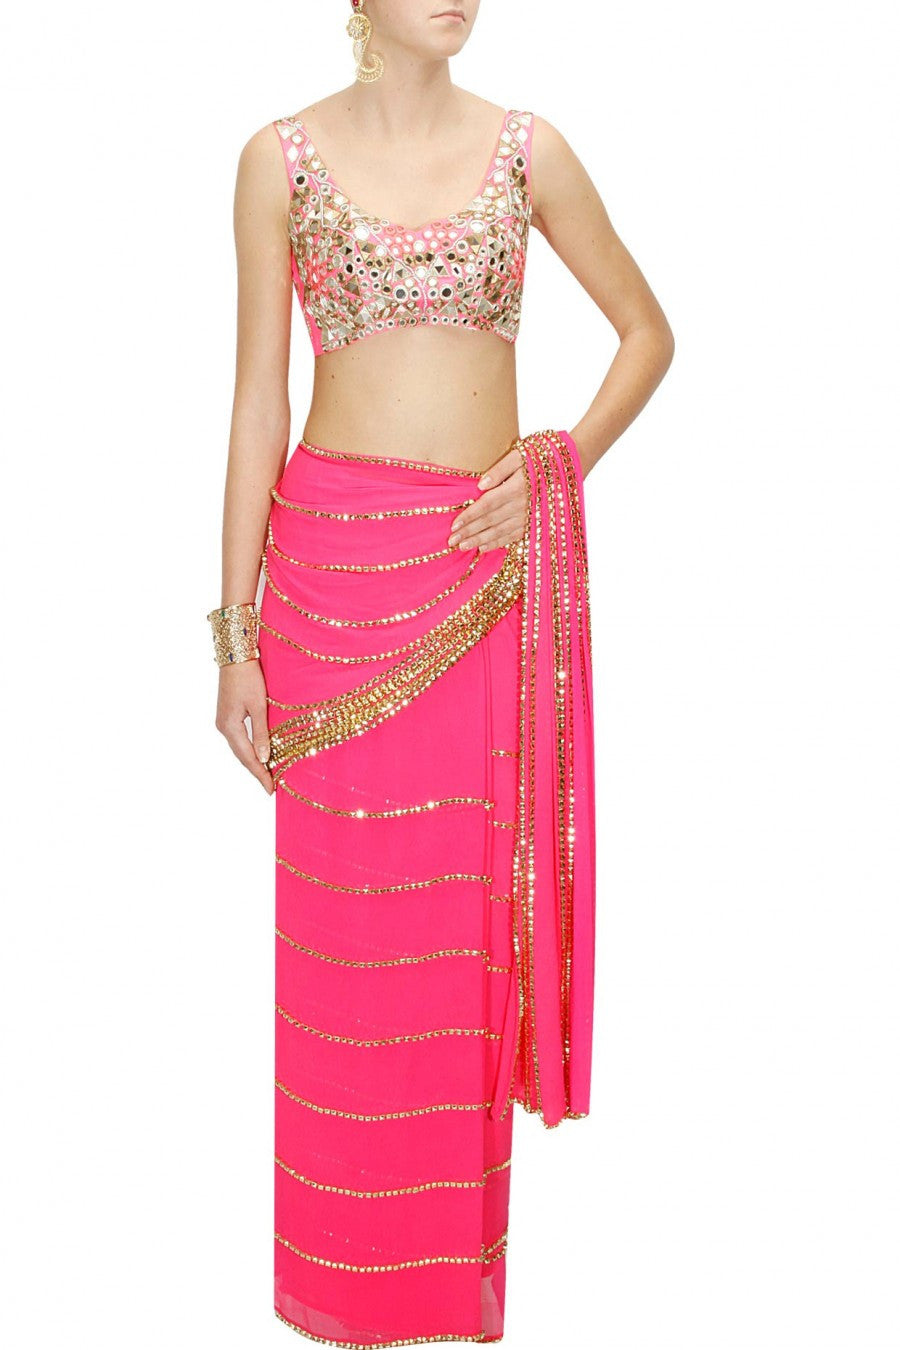 Pink colour sari at Panache Haute Couture